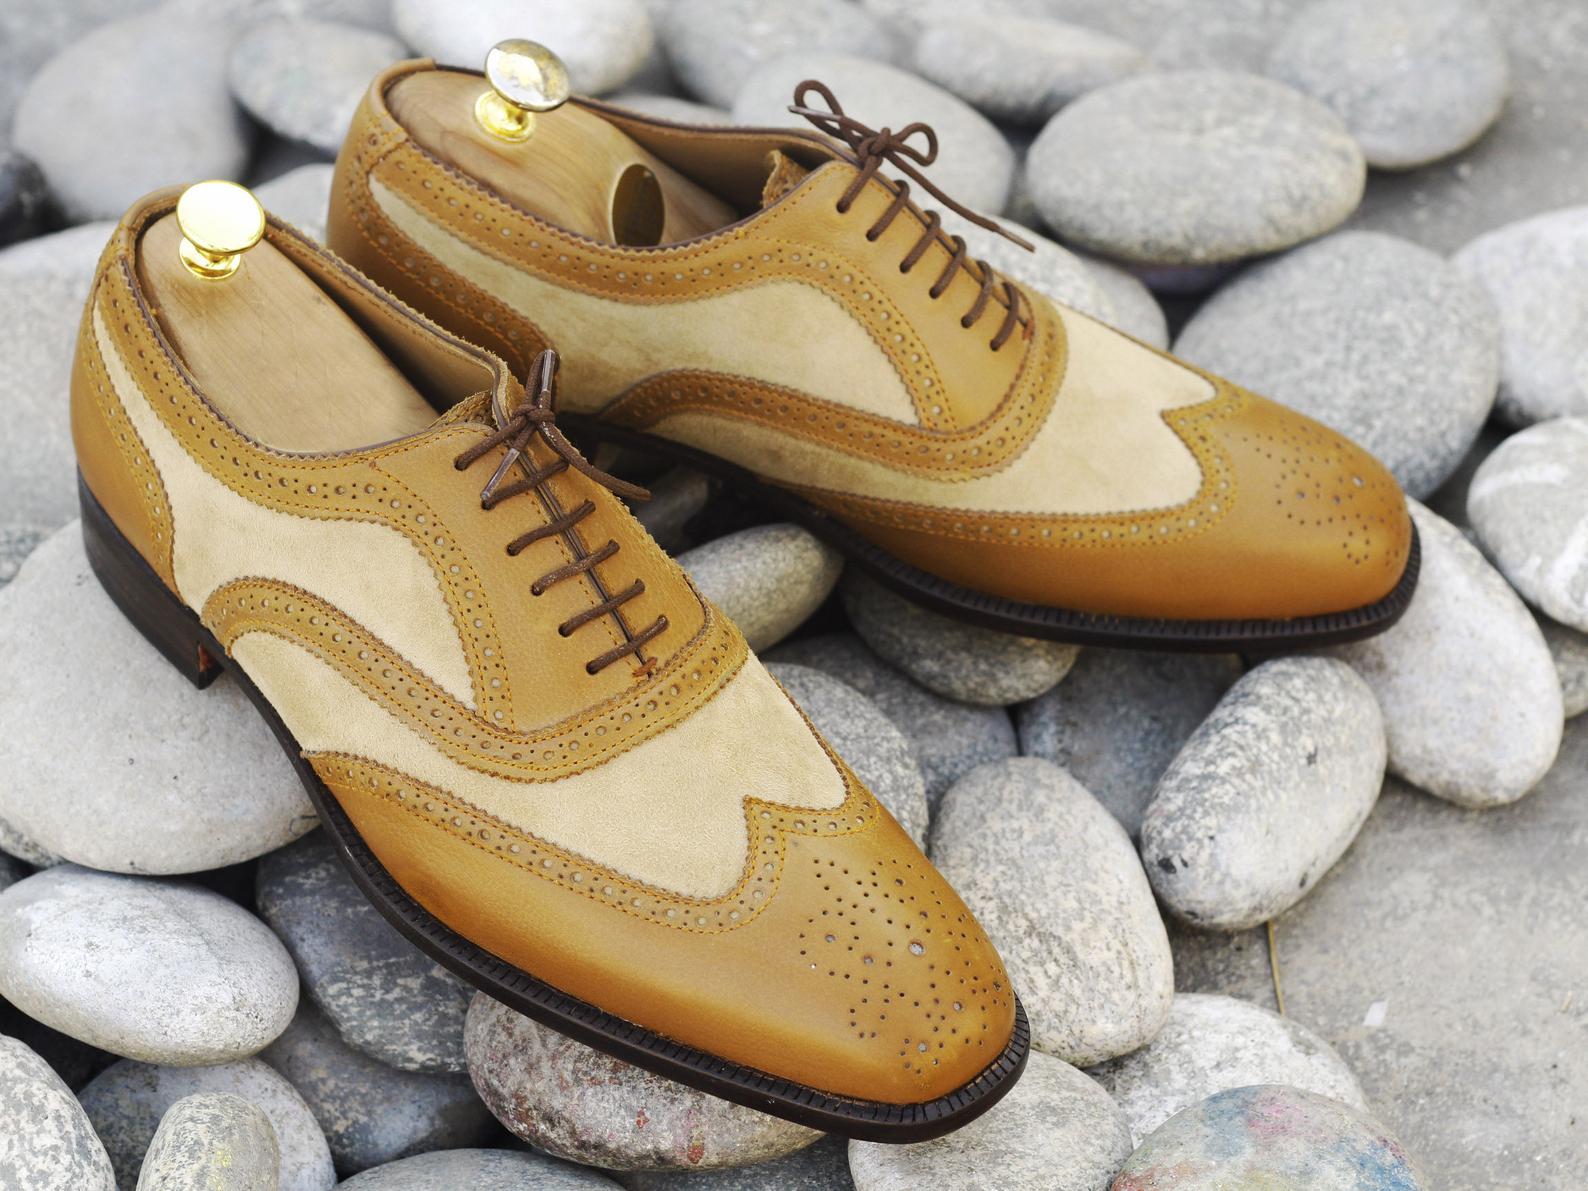 Handmade Men brown Oxfords Formal shoes Men brogue dress shoes Leather  shoes men